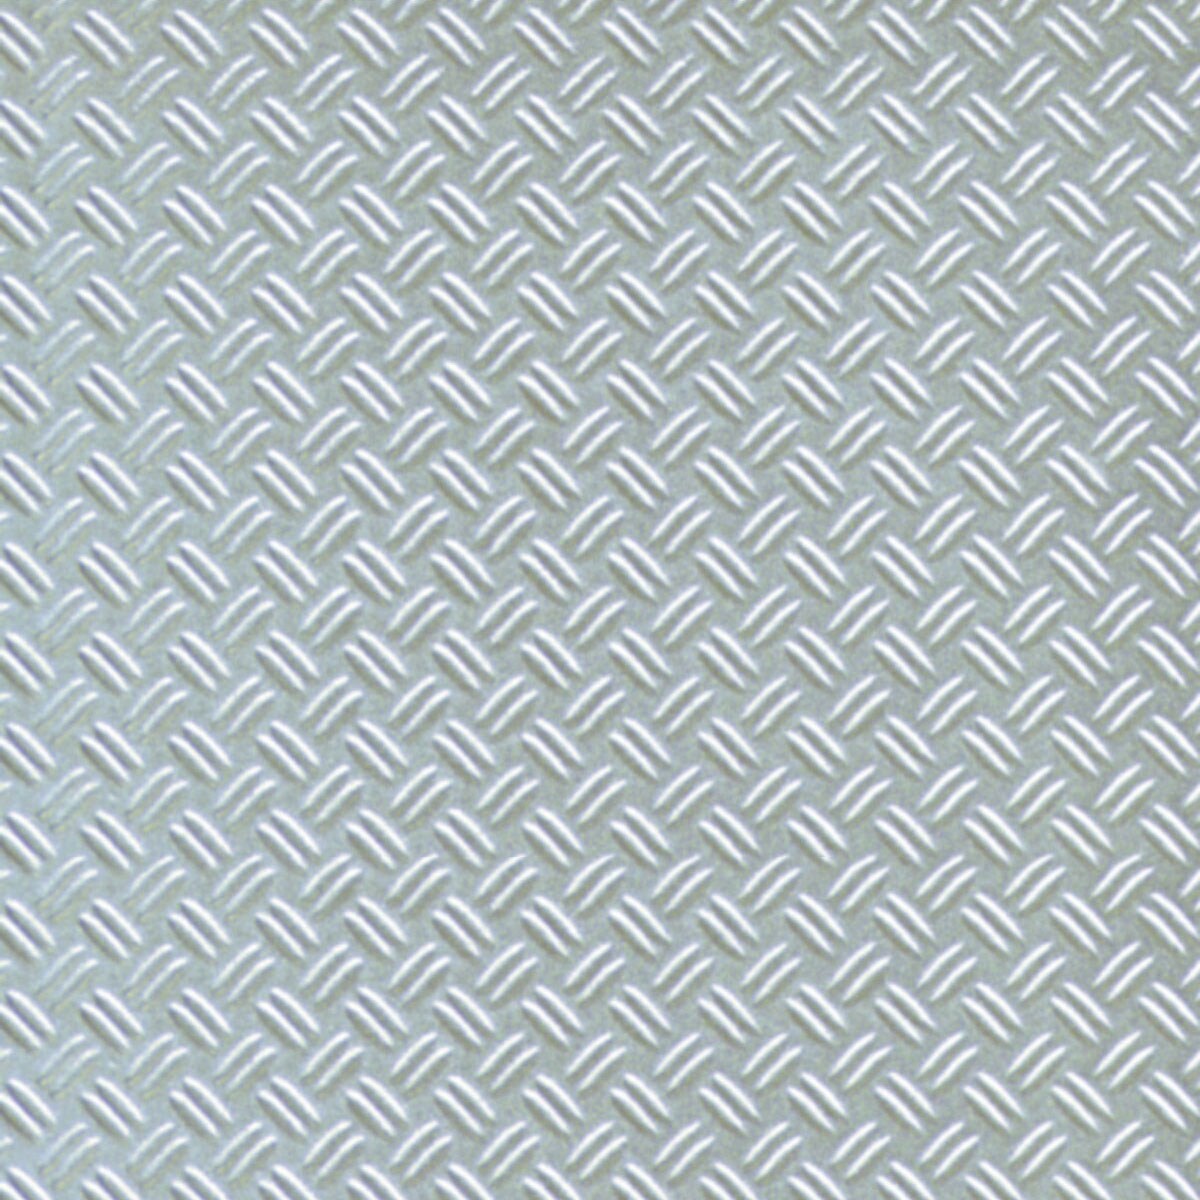 Plastruct Patterned Sheets, Double Diamond Plate,&#xA0;1:24 Scale